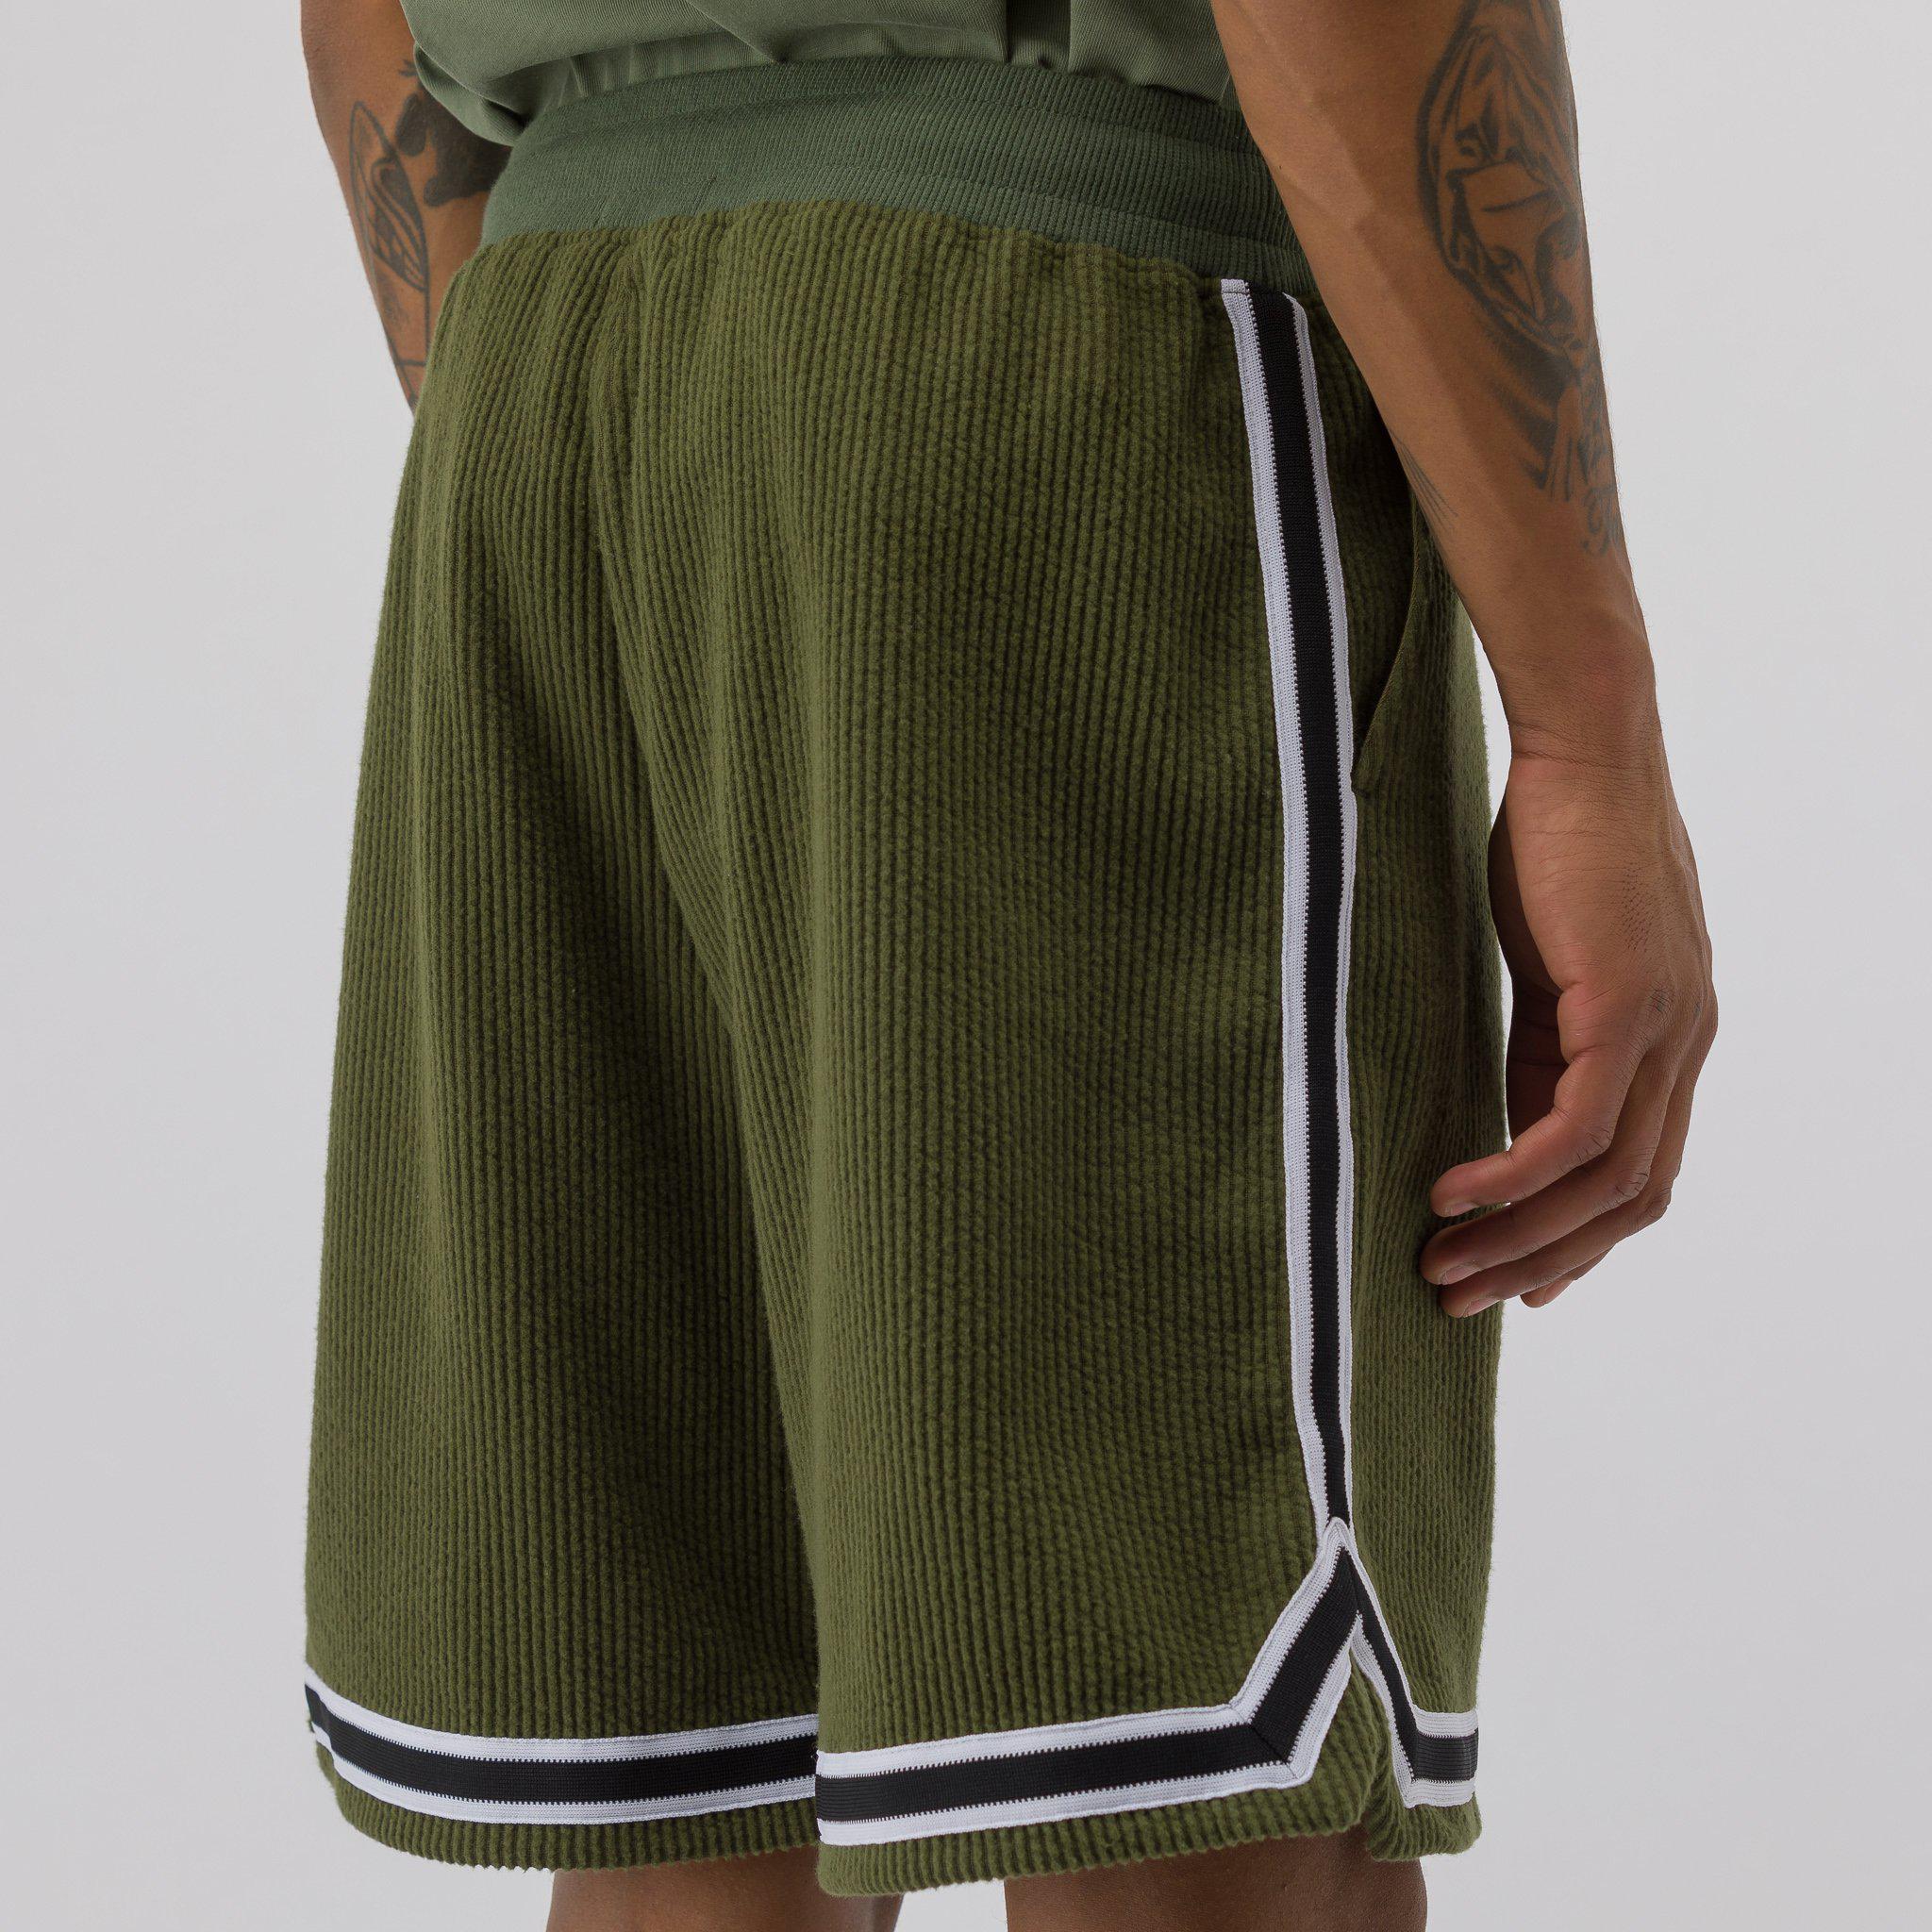 john elliott corduroy basketball shorts